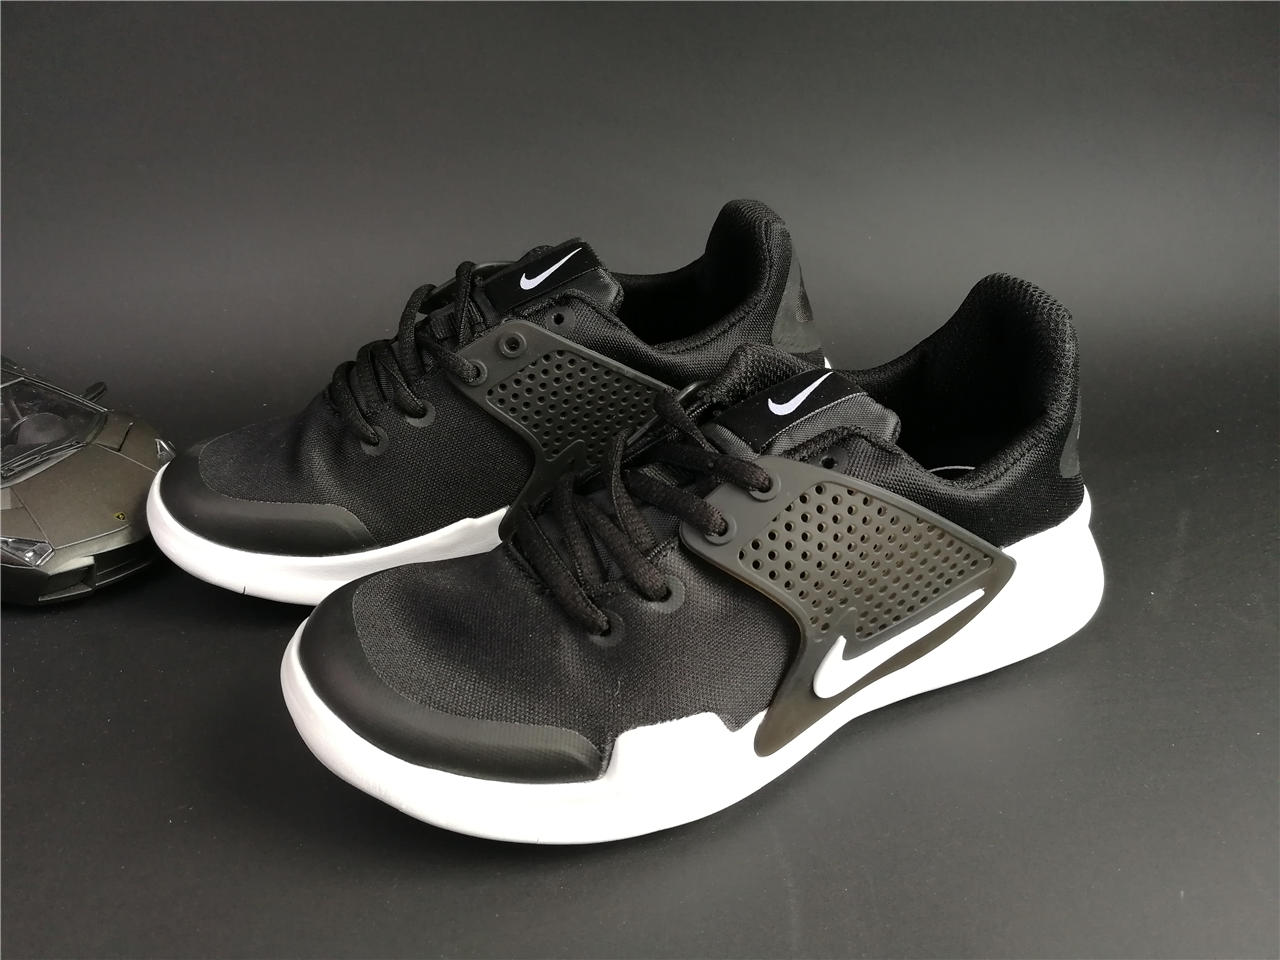 Nike Air Presto 4 Mesh Black White Shoes